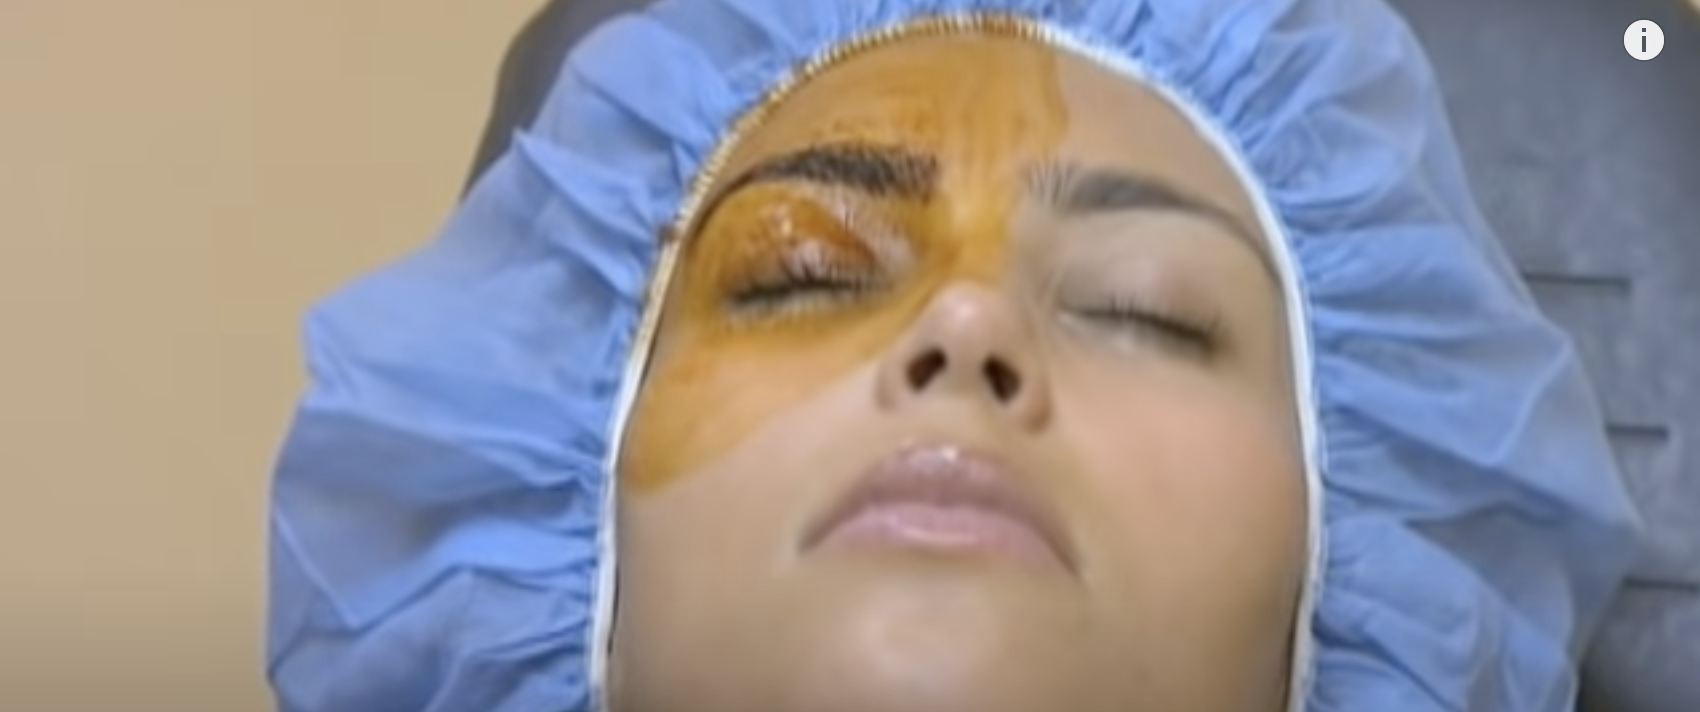 kim kardashian getting an eye procedure done